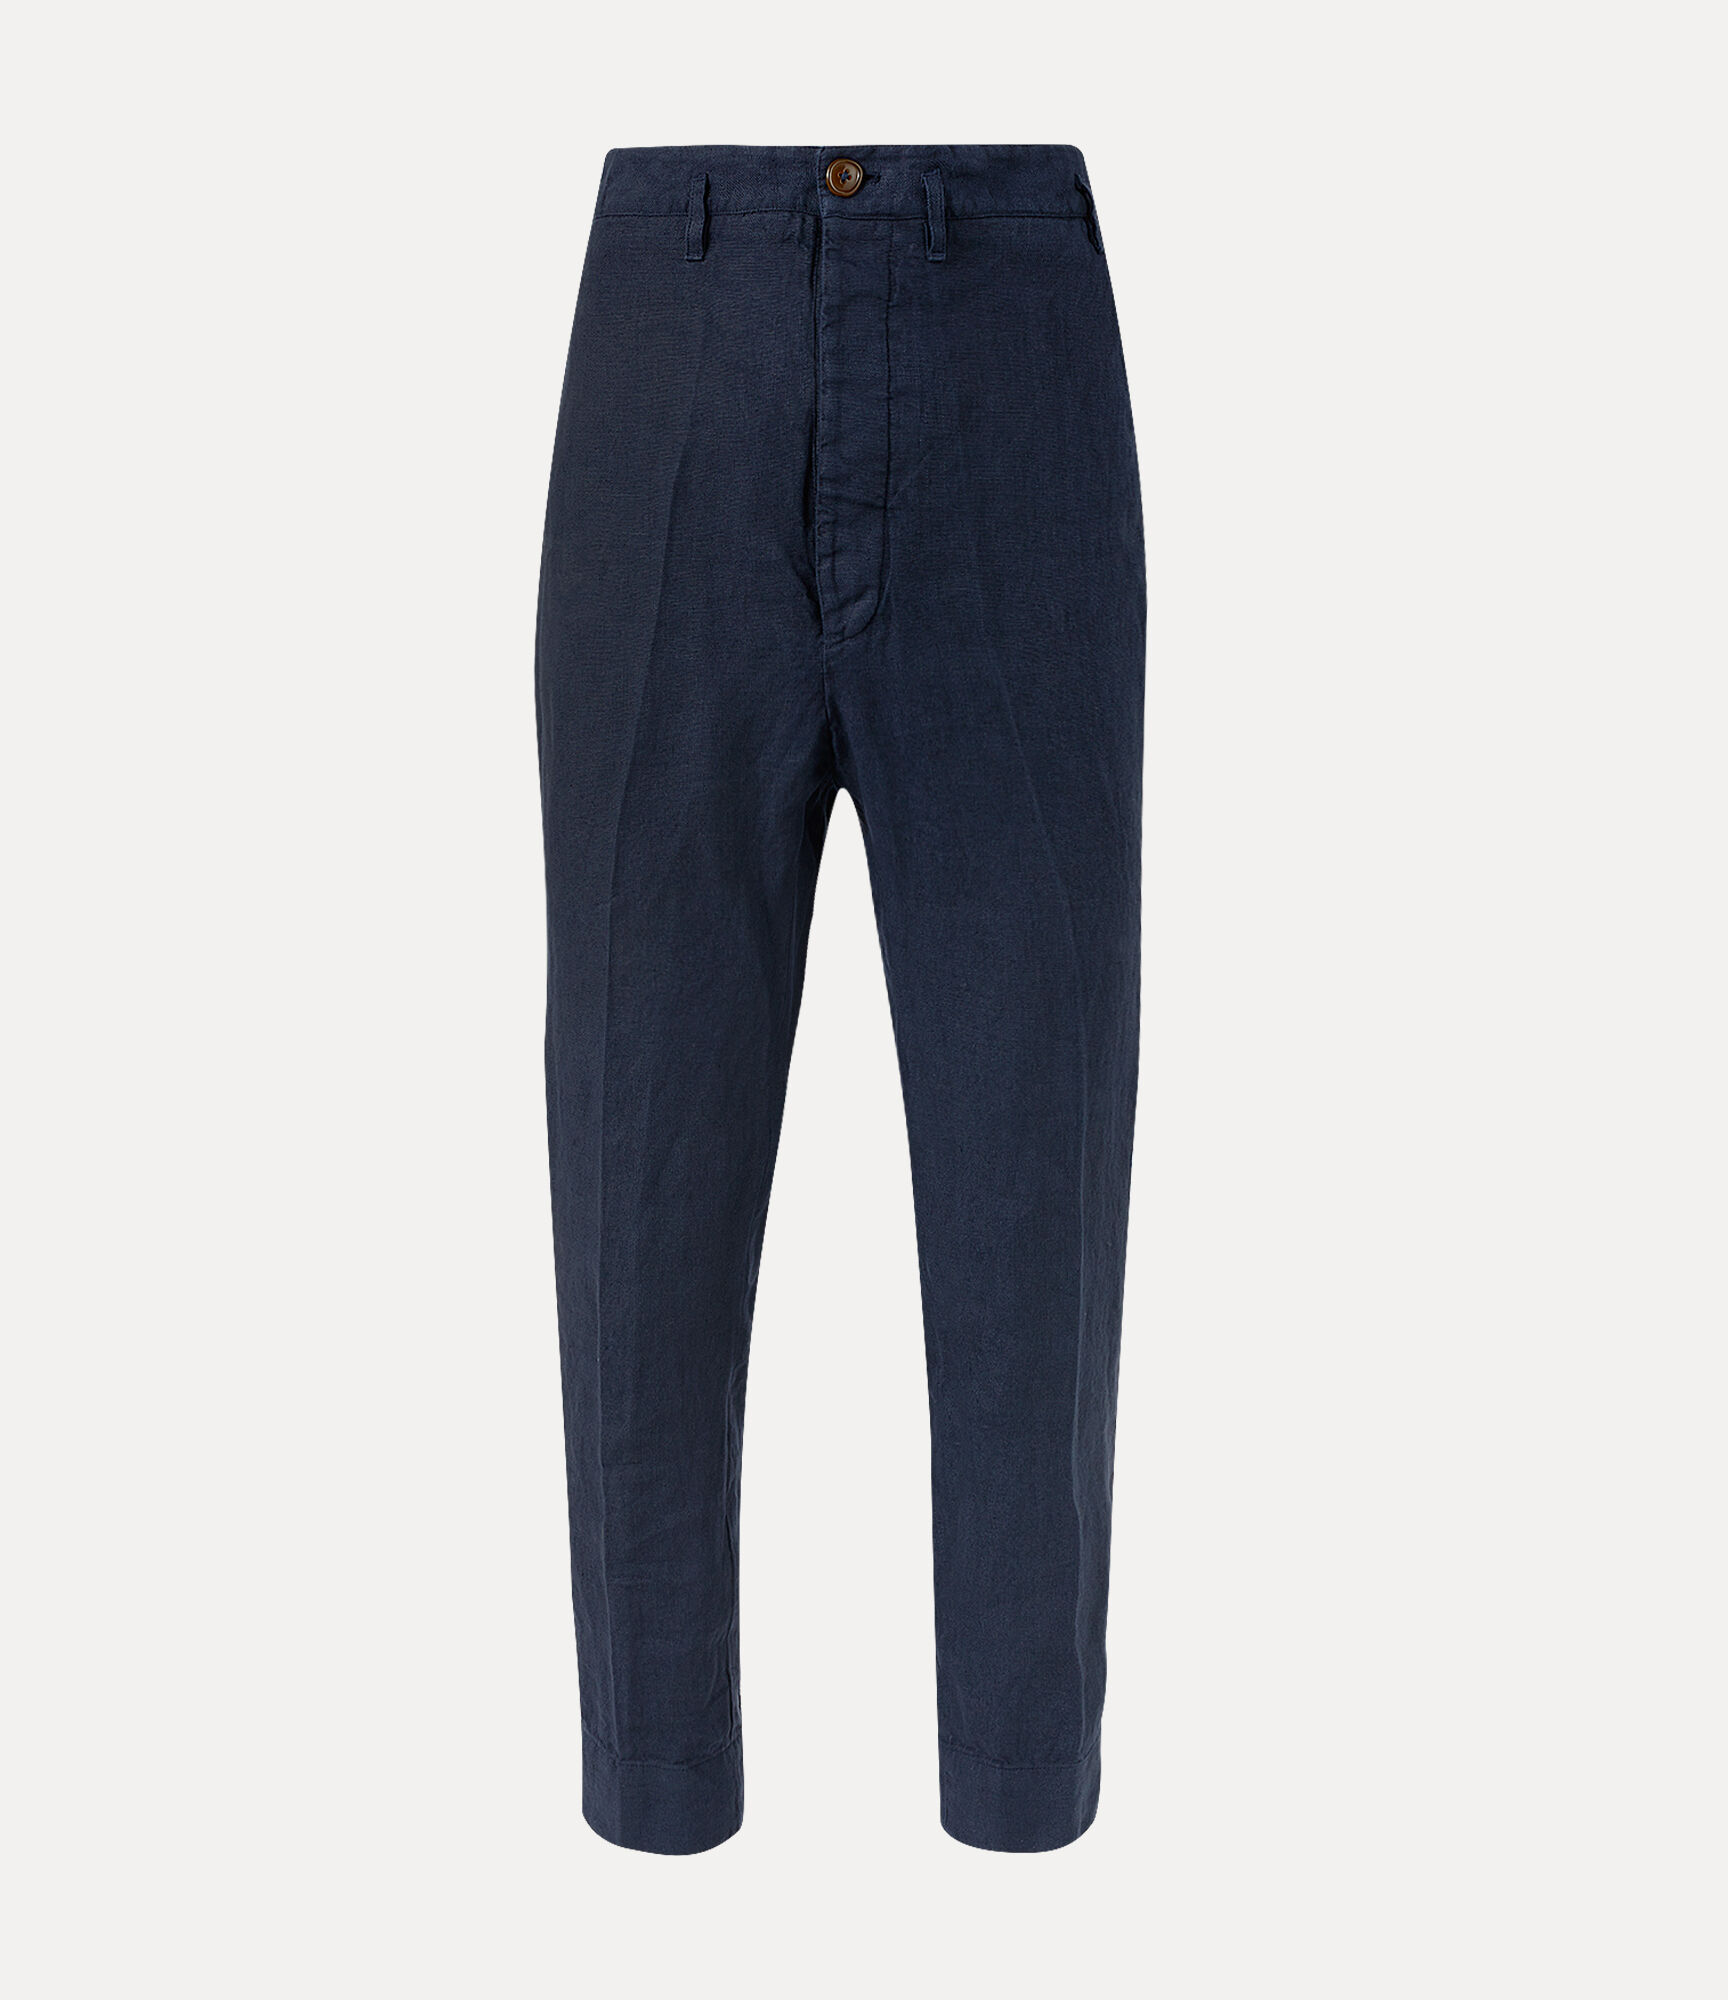 Mens Designer Clothes | DOLCE & GABBANA Men's Jeans Shorts #167